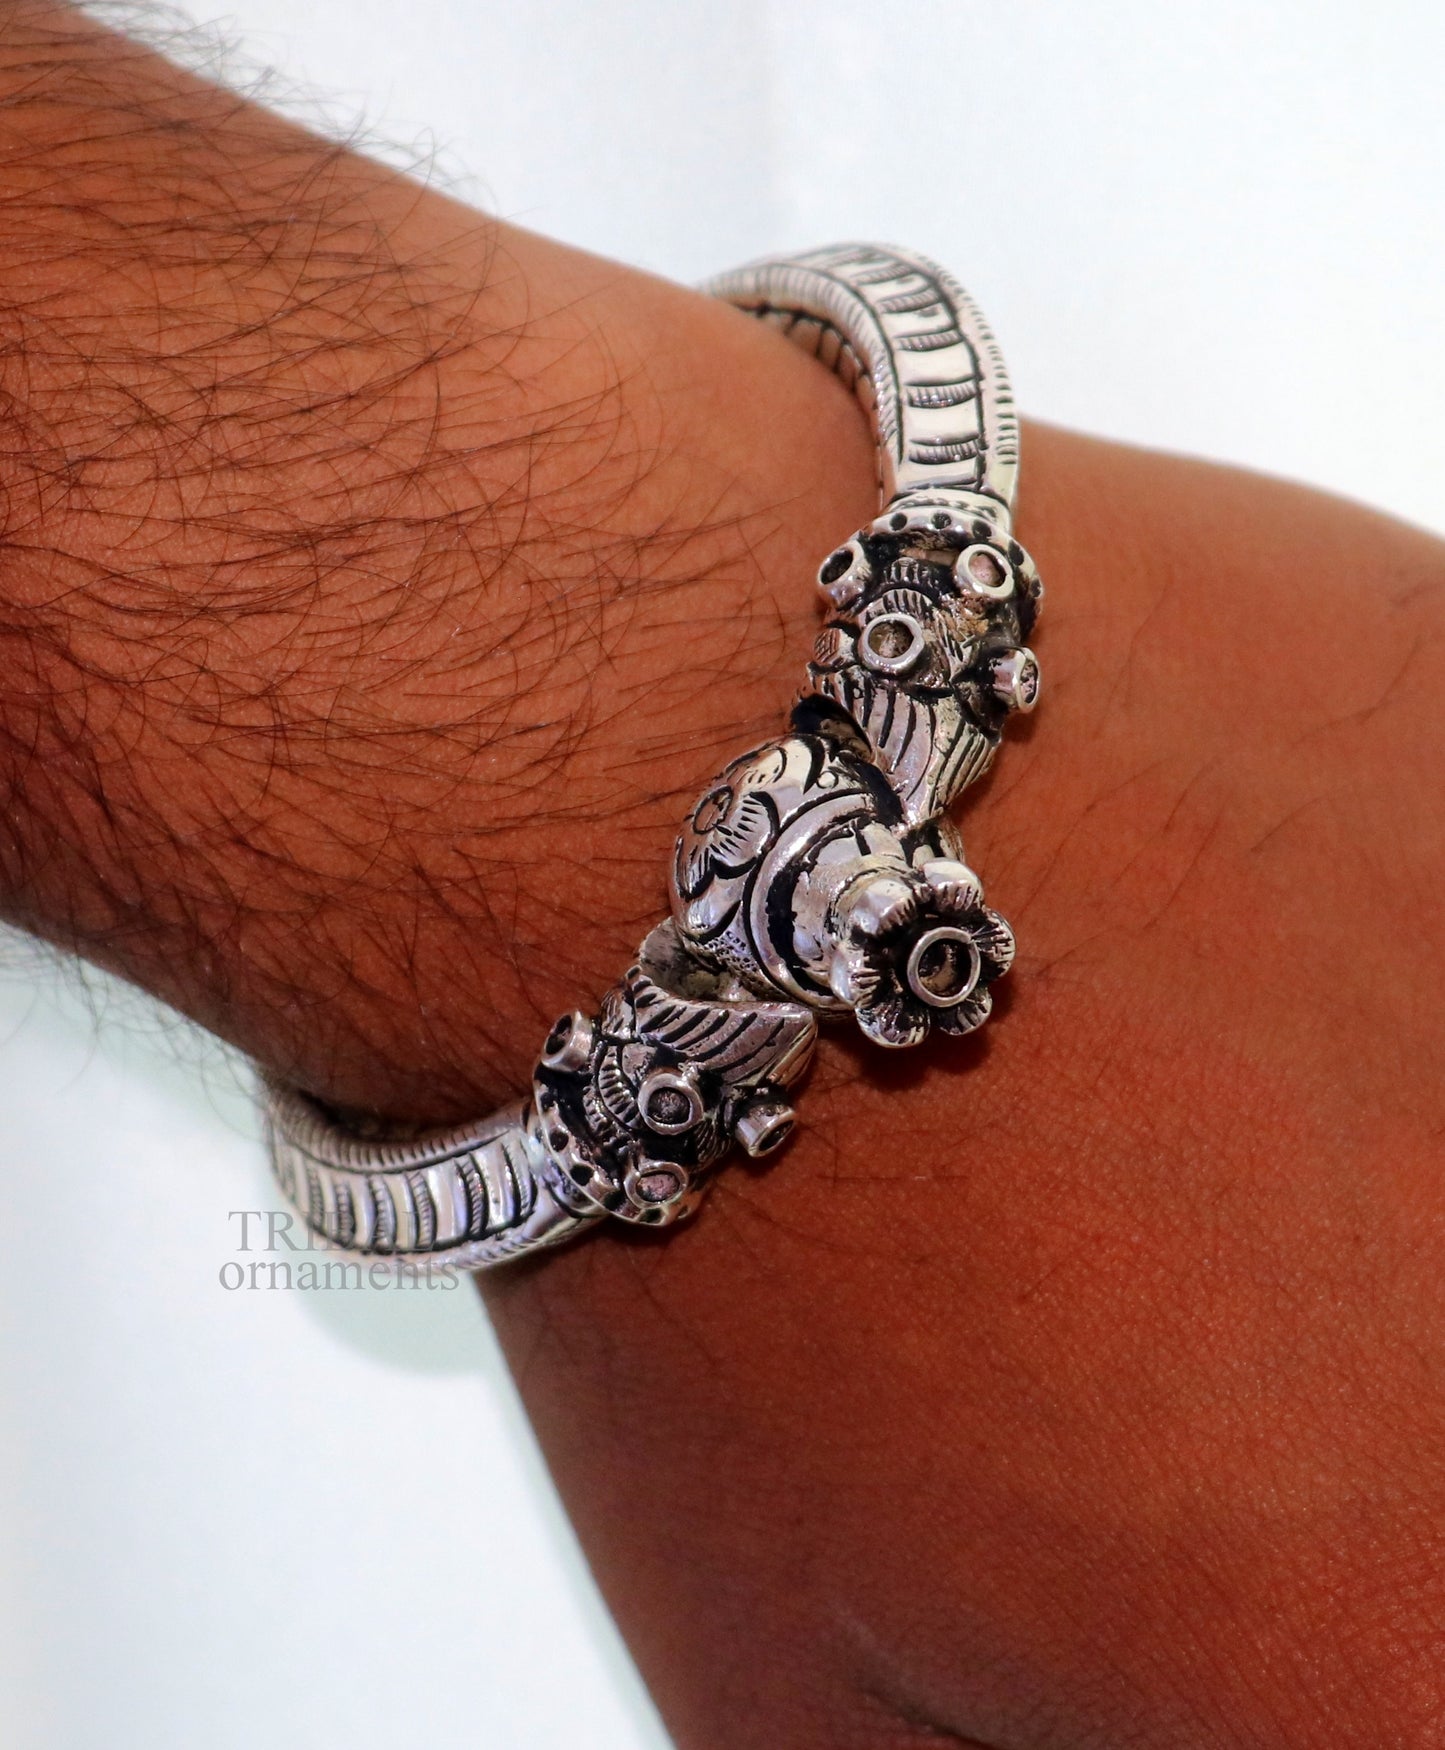 Vintage design handcrafted unique work 925 sterling silver bangle bracelet kada unique screw locking system best gifting jewelry nsk464 - TRIBAL ORNAMENTS